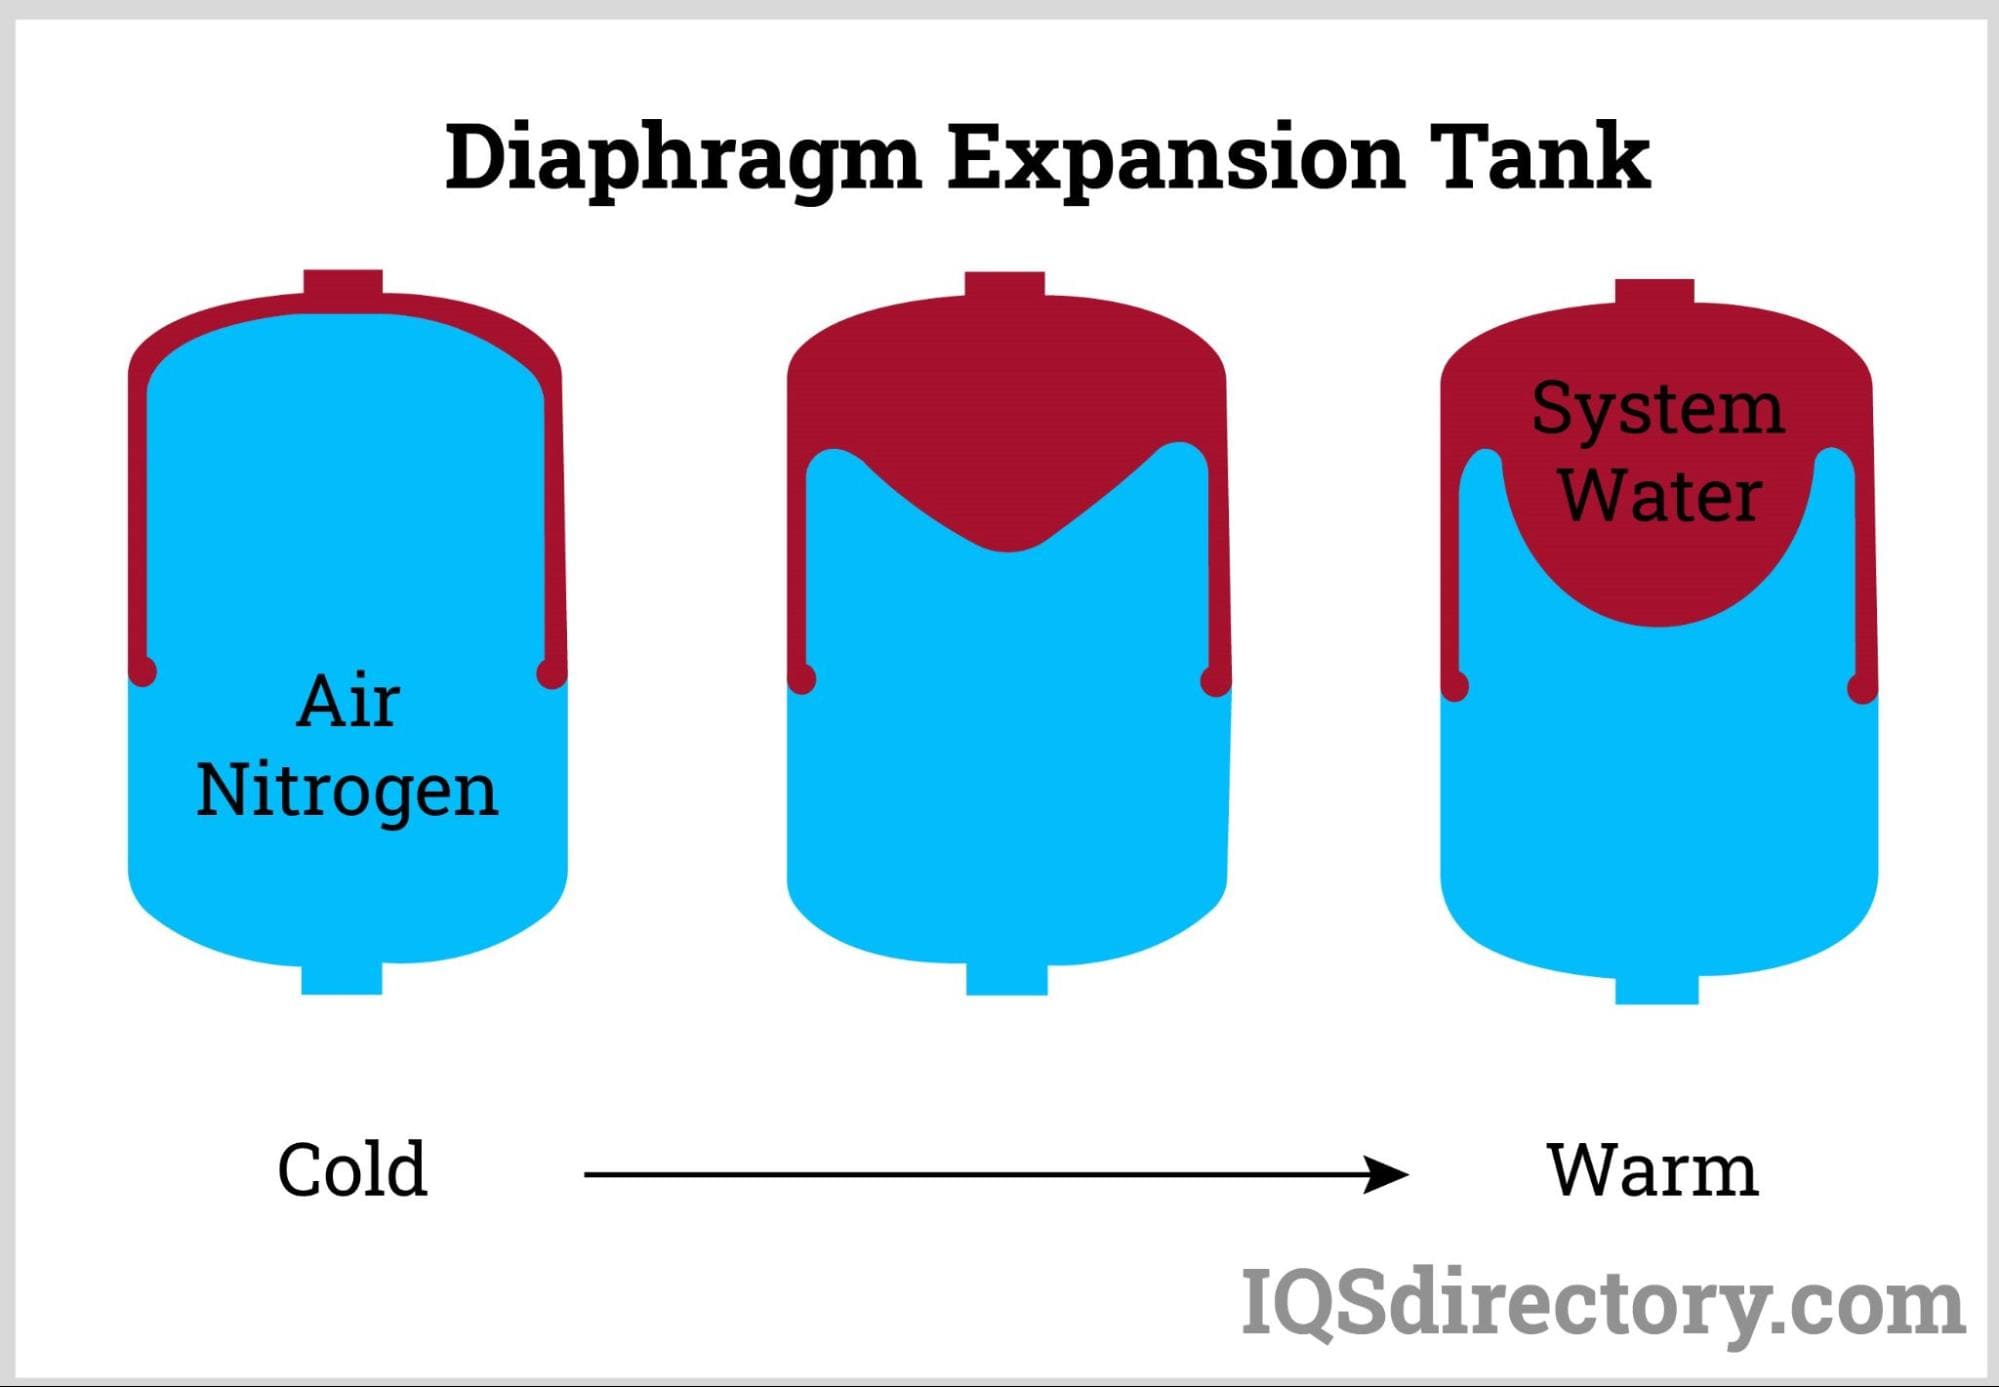 Diaphragm Expansion Tank